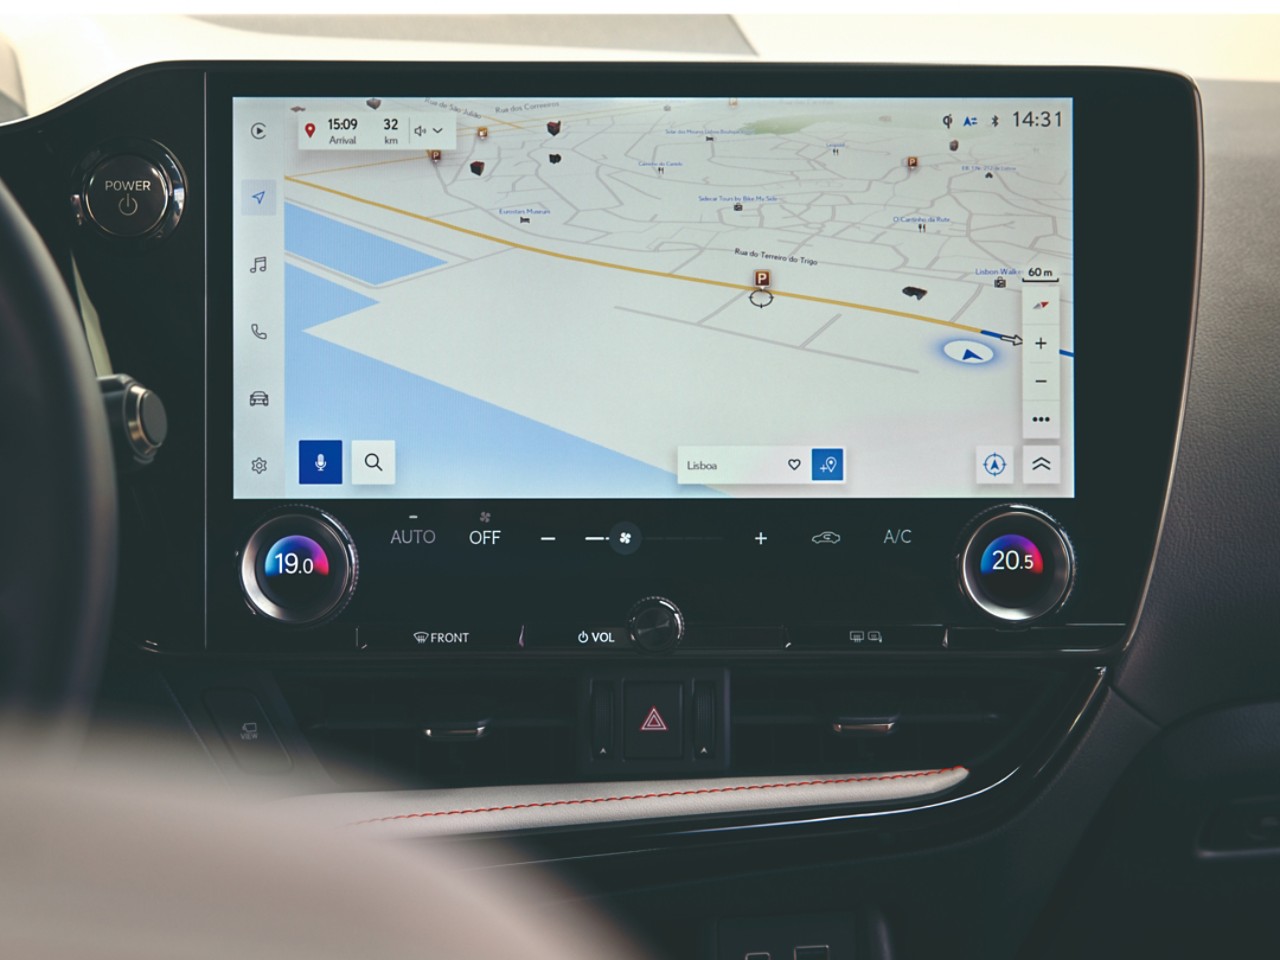 Naviagtion on a Lexus multimedia screen